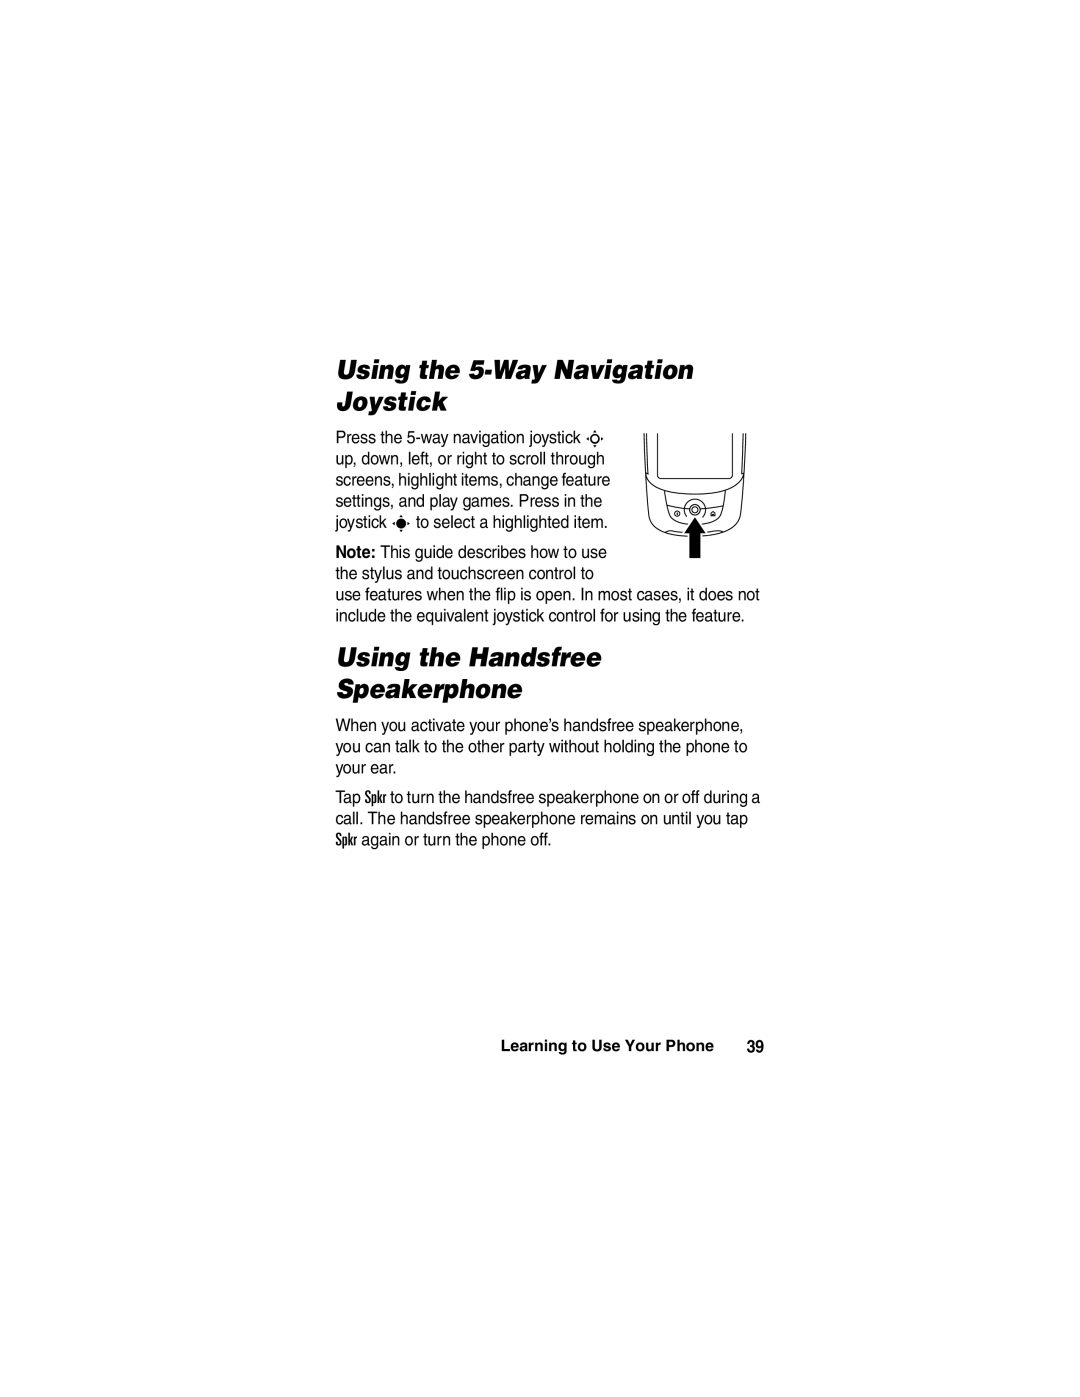 Motorola A780 manual Using the 5-Way Navigation Joystick, Using the Handsfree Speakerphone 